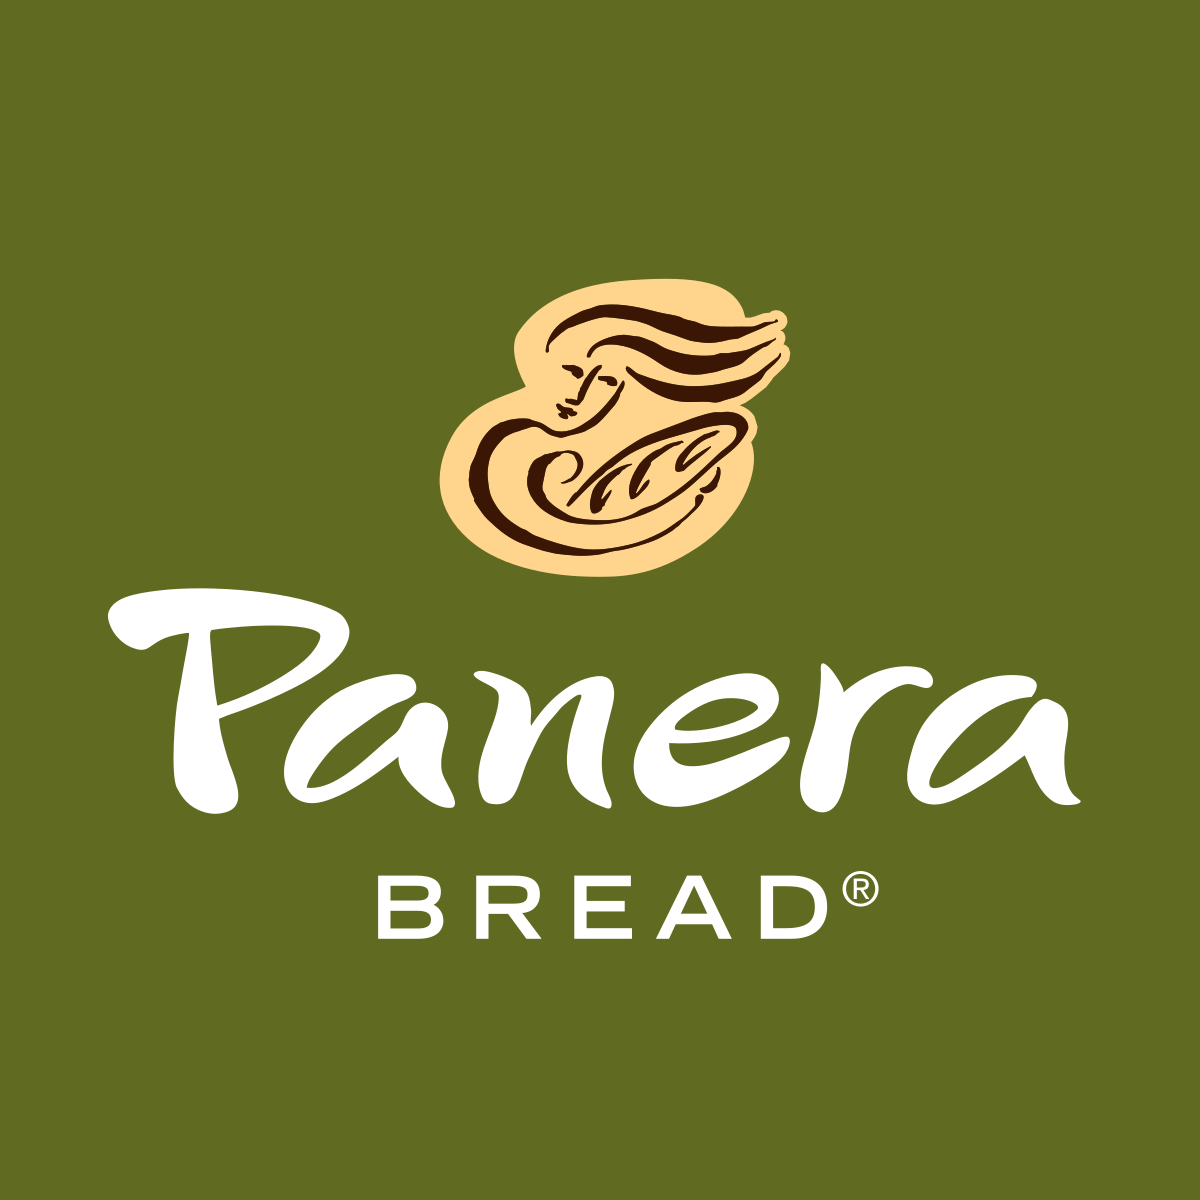 Panera Bread.png